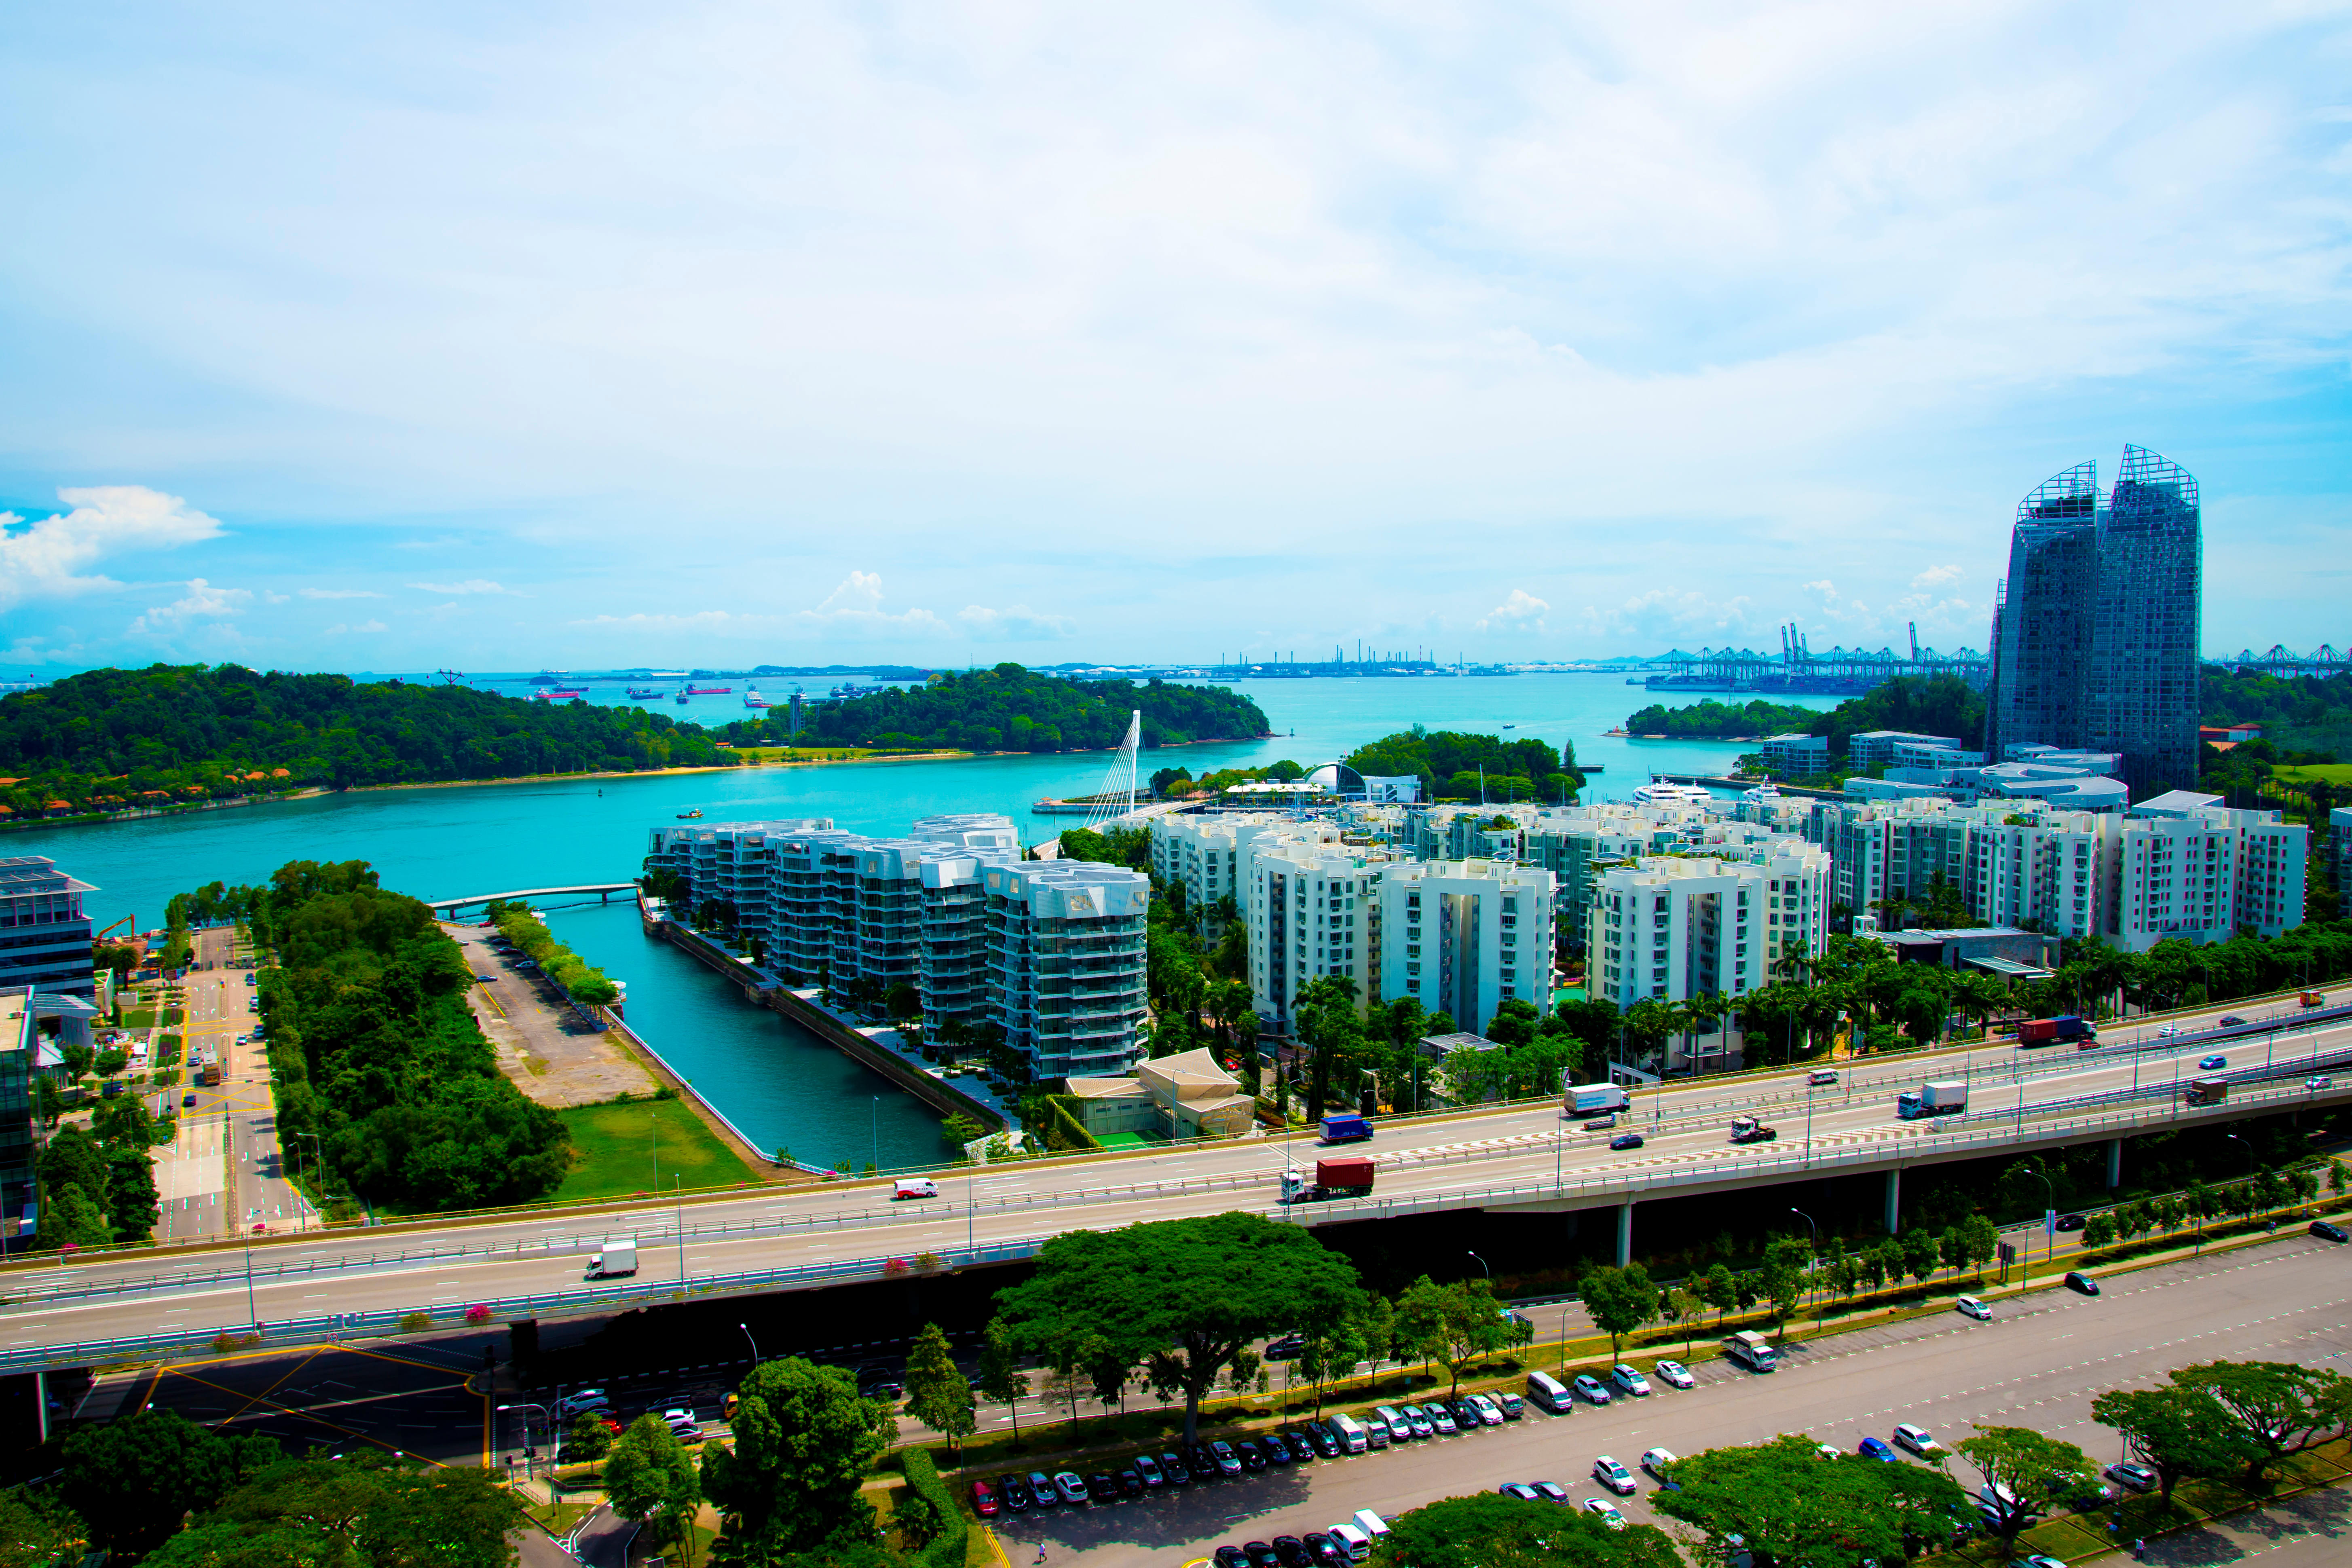 West Singapore